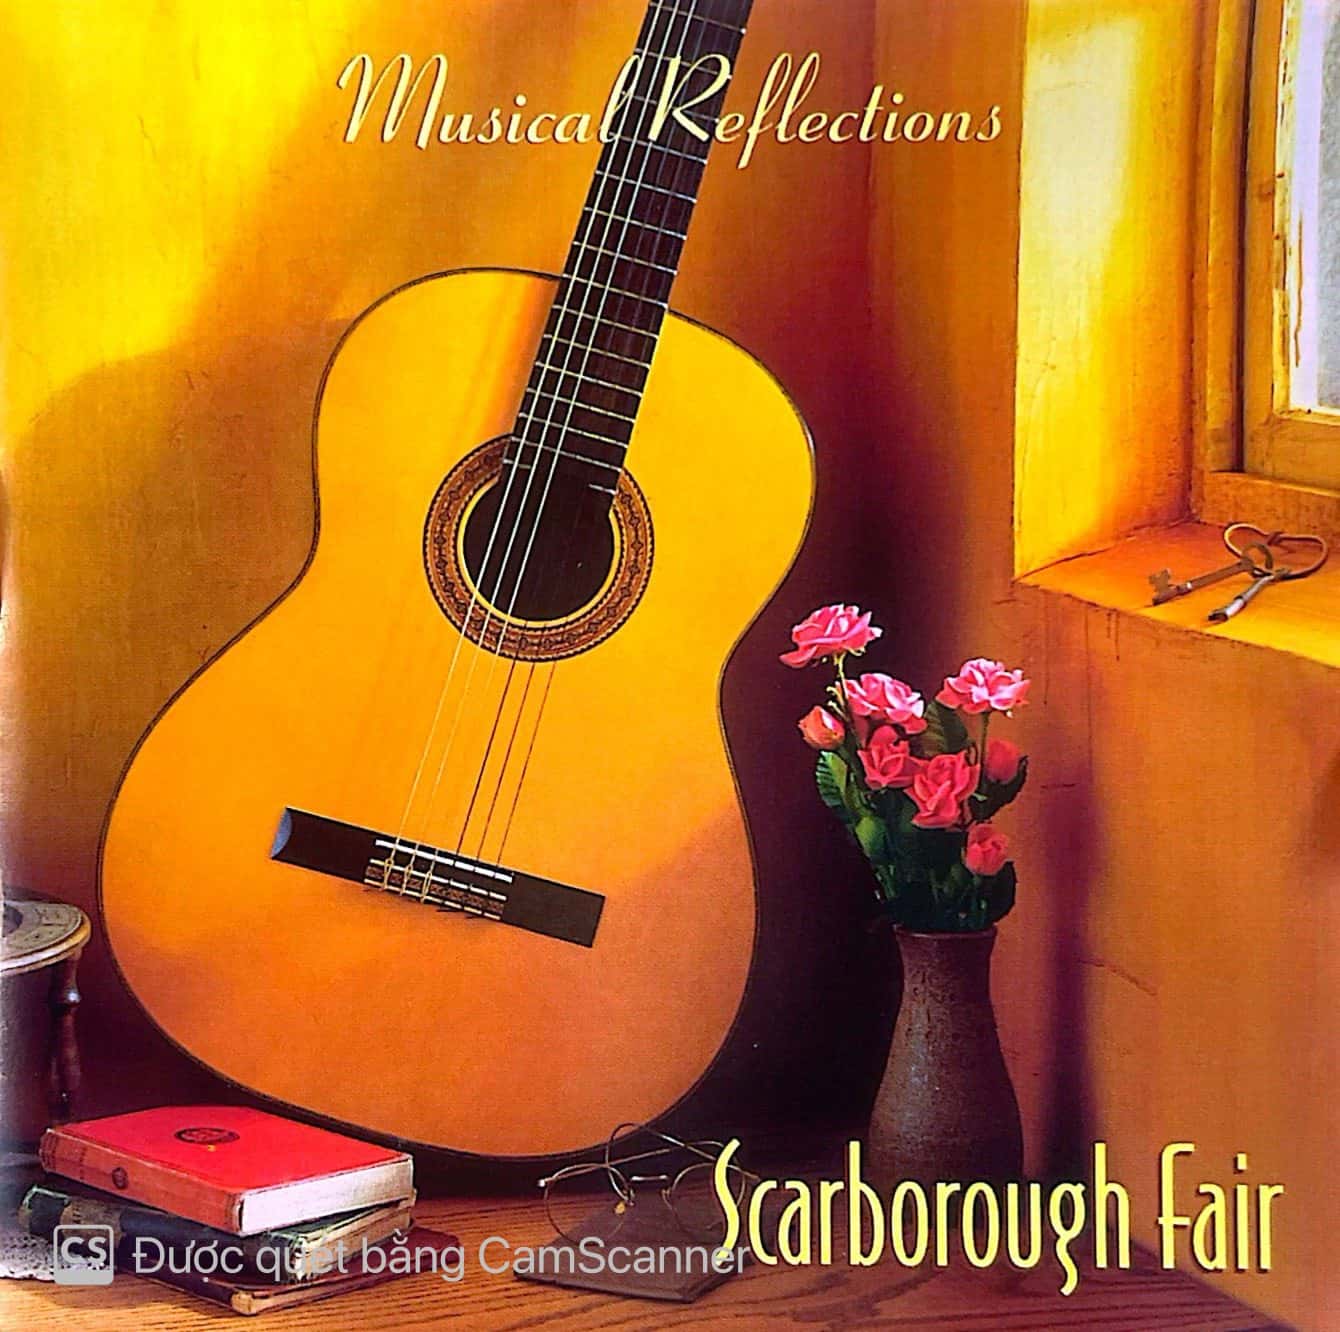 Musical Reflections - Sarborough Fair